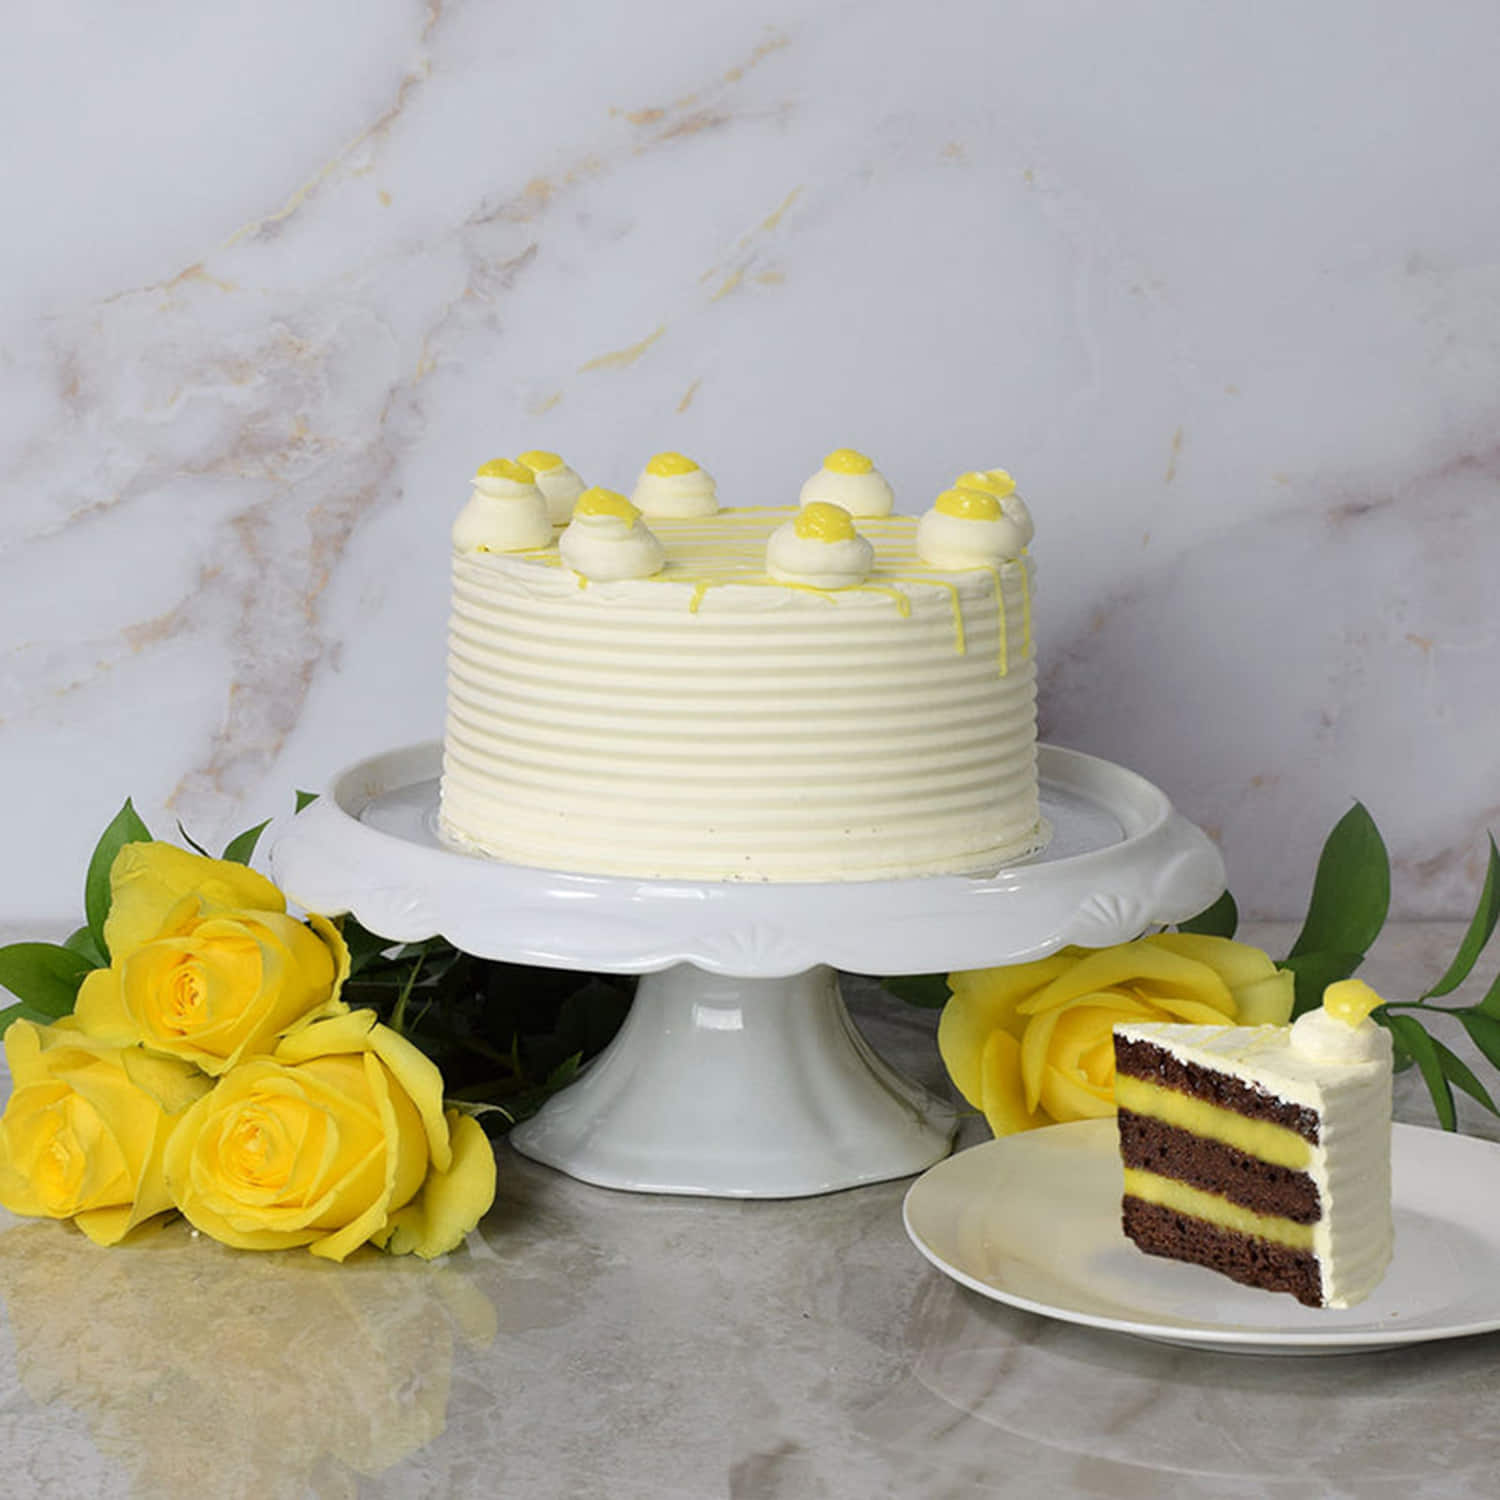 Lemon Ricotta Cake with Toasted Pistachio Frosting - Hein van Tonder - Food  Photographer & Stylist